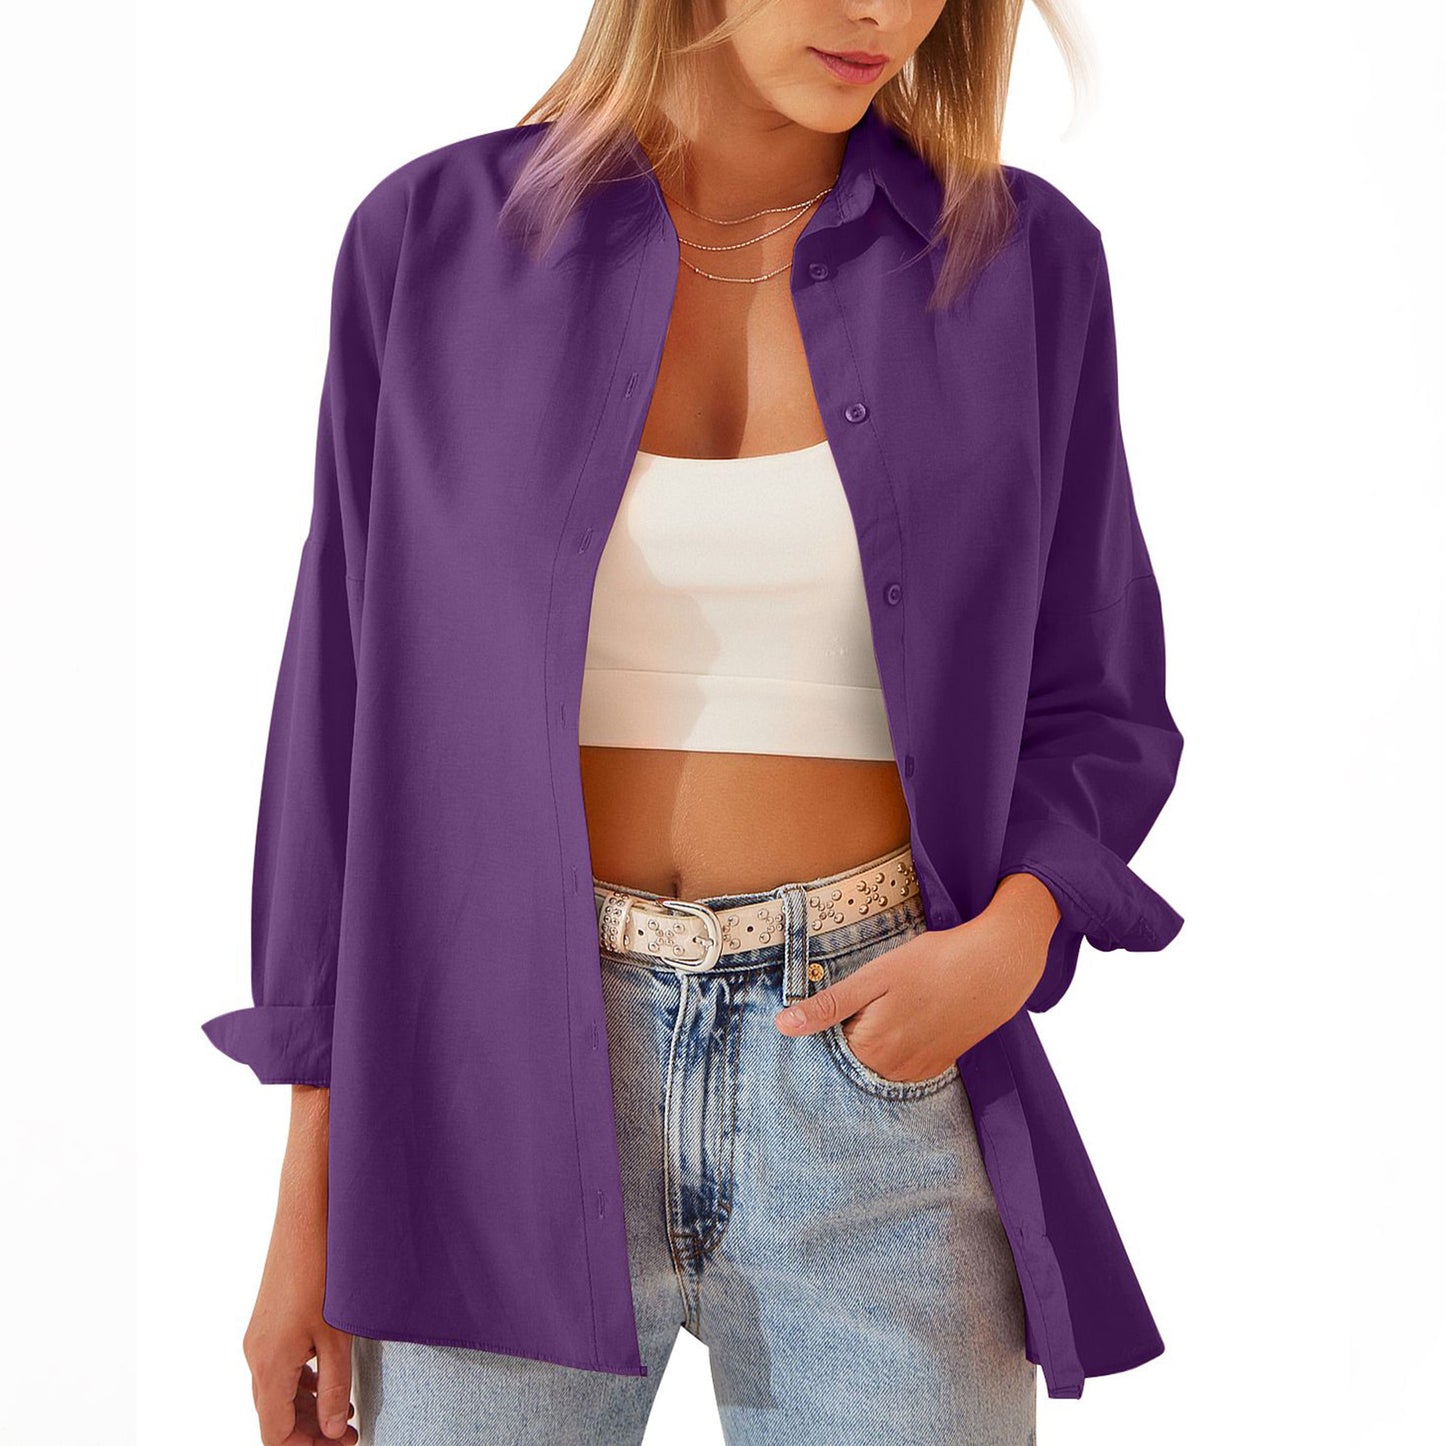 Shirt  | Women's Shirt Jacket Long Sleeve Blouse Button Down Tops Candy Color Shirt | Purple |  2XL| thecurvestory.myshopify.com